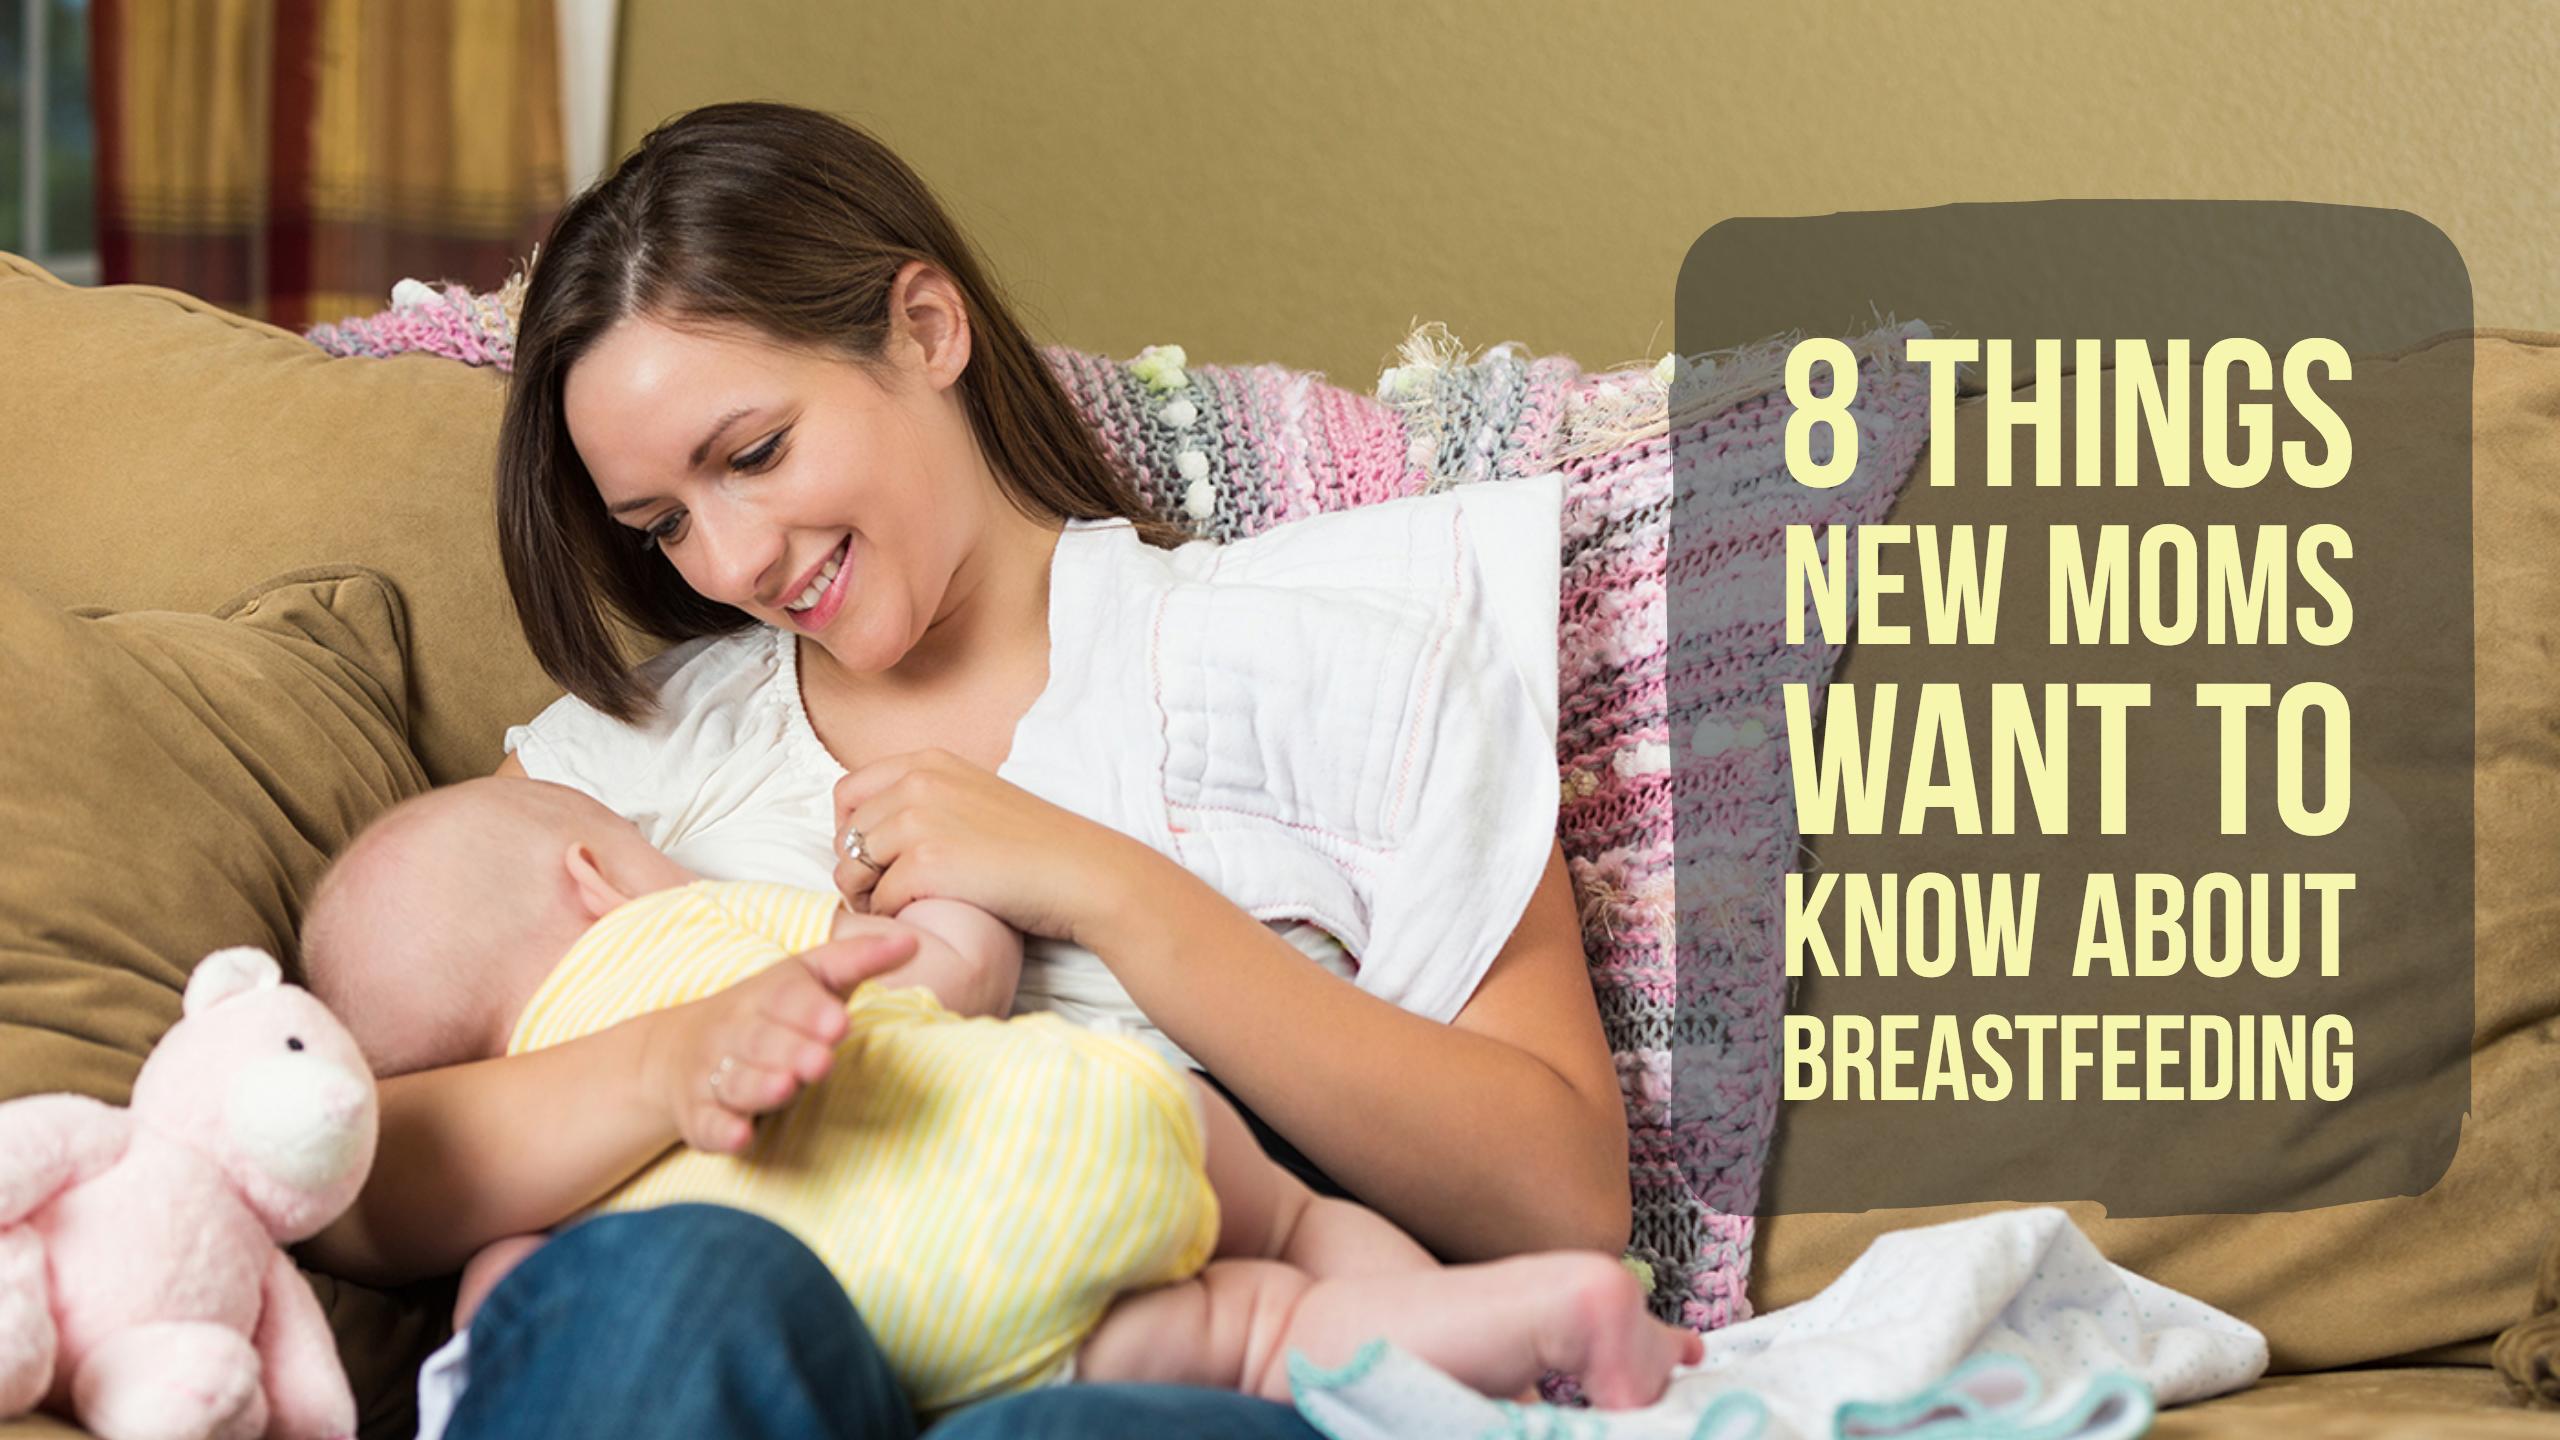 Breastfeeding tips for New Moms